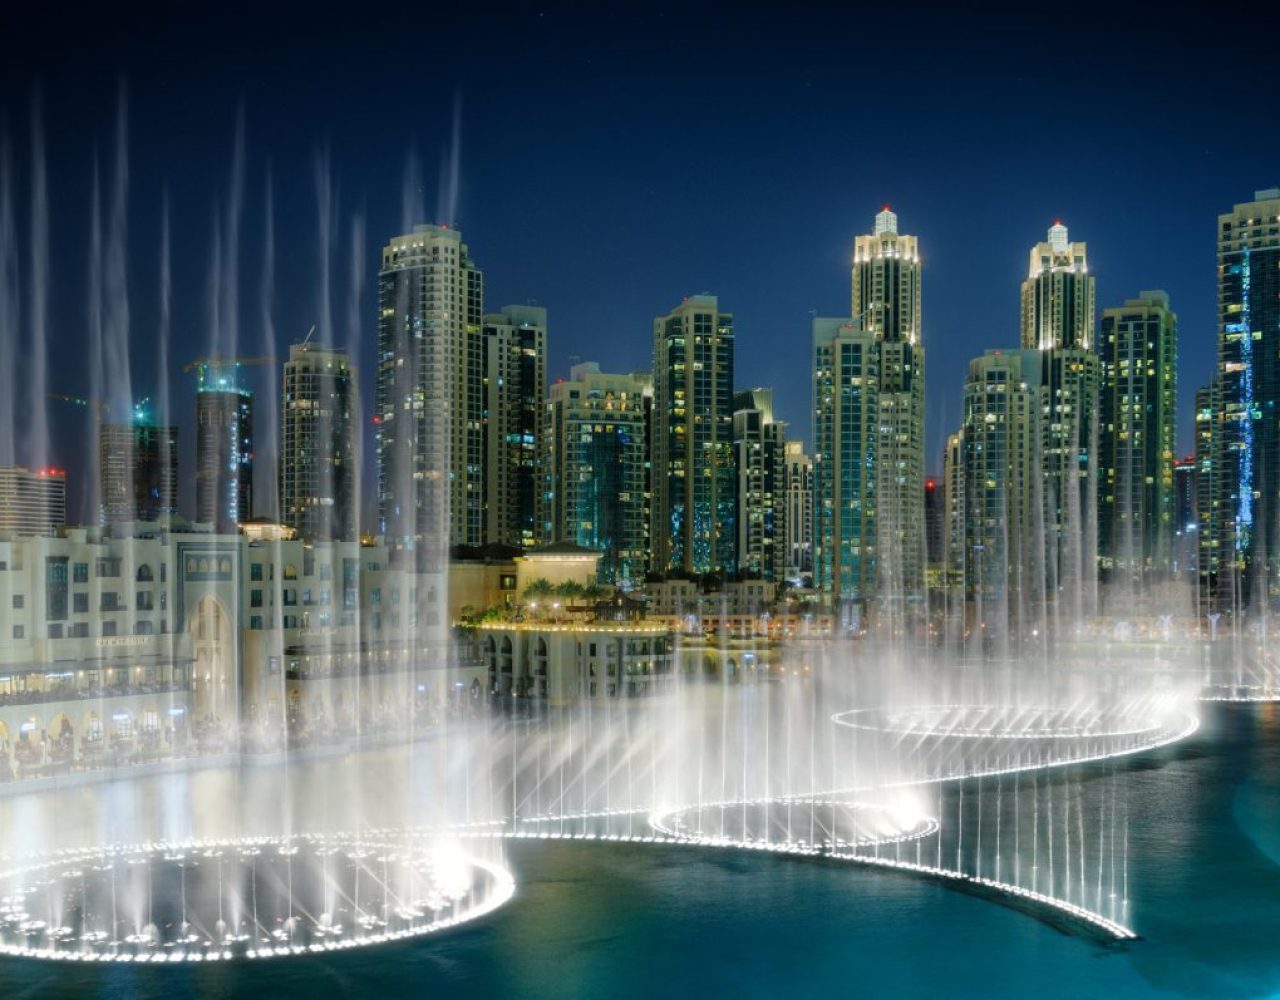 Dubai Fountain Show